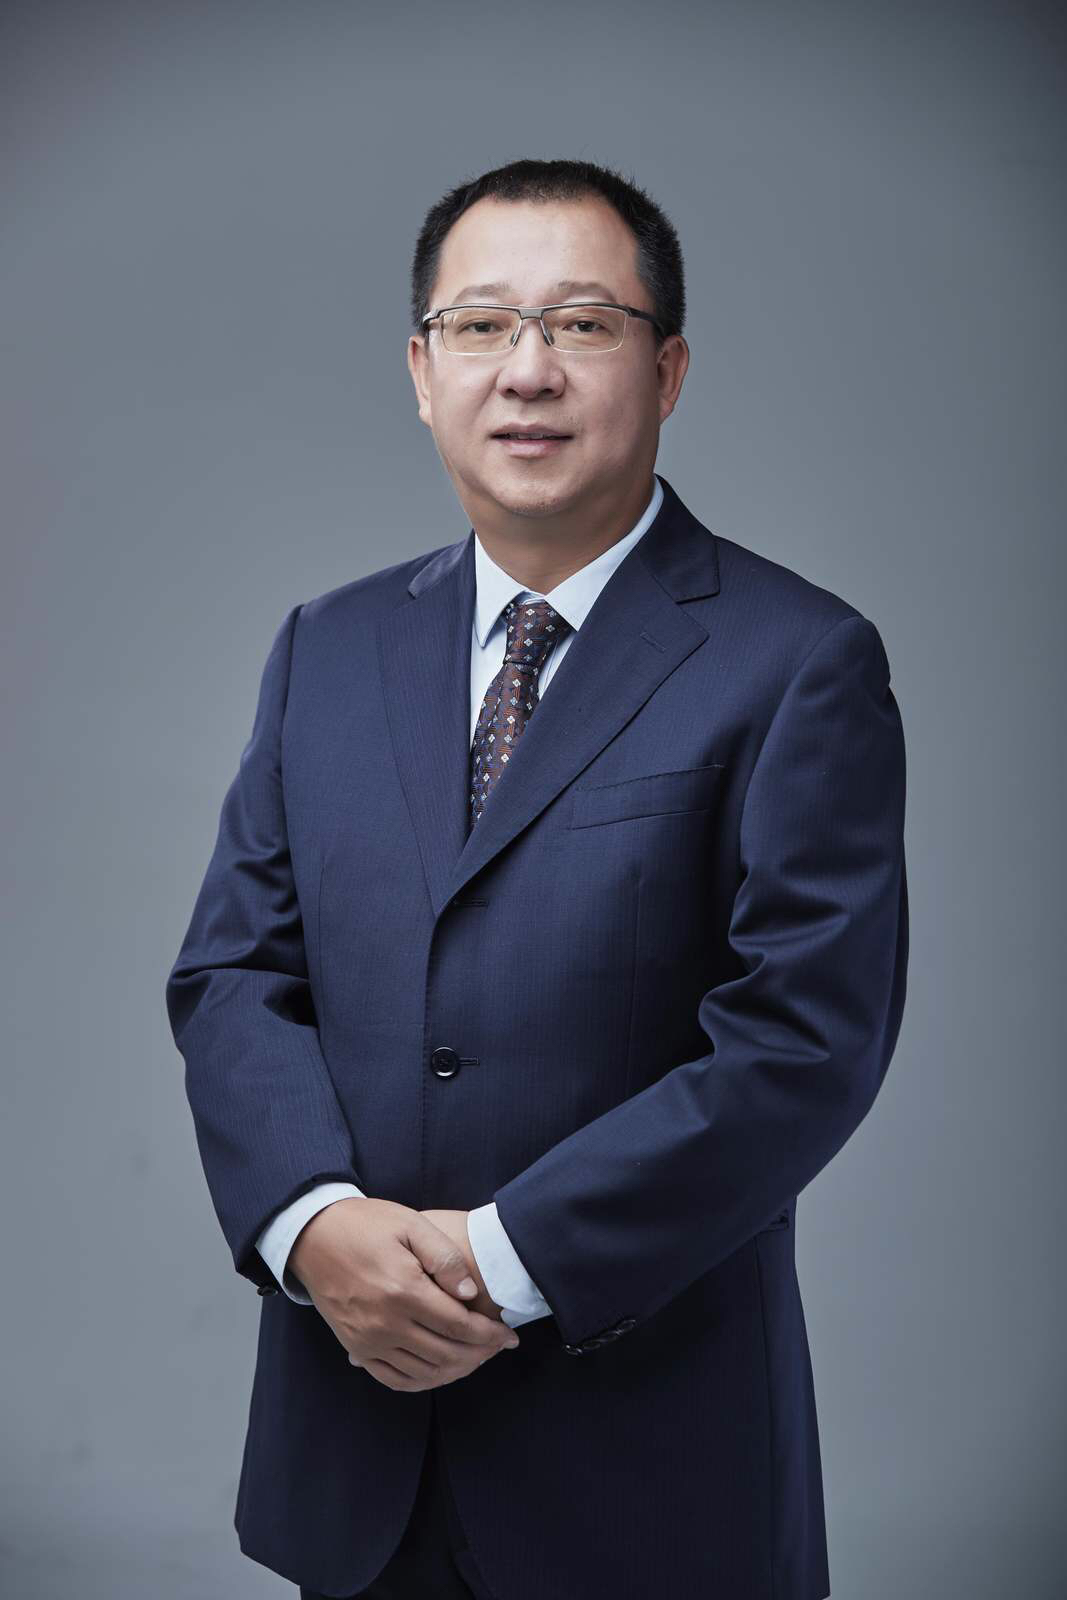 Mr. Zhi Gao